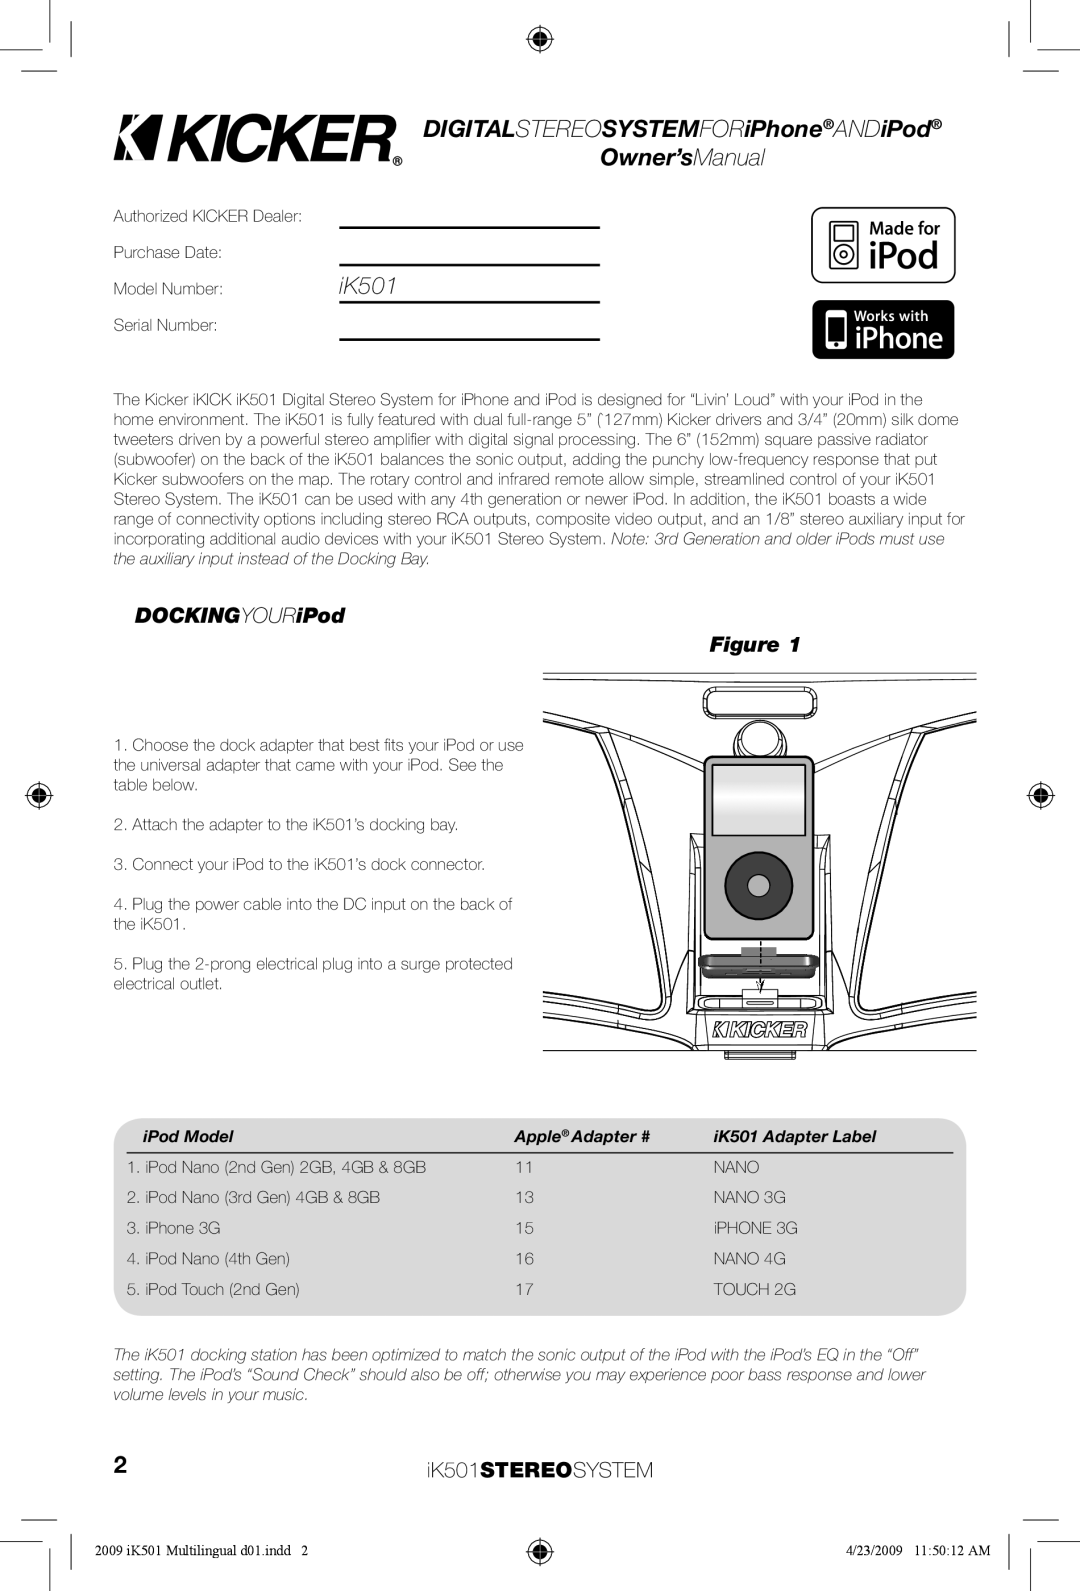 Kicker manual DIGITALSTEREOSYSTEMFORiPhoneANDiPod Owner’sManual, DOCKINGYOURiPod Figure, iK501STEREOSYSTEM, iPod Model 